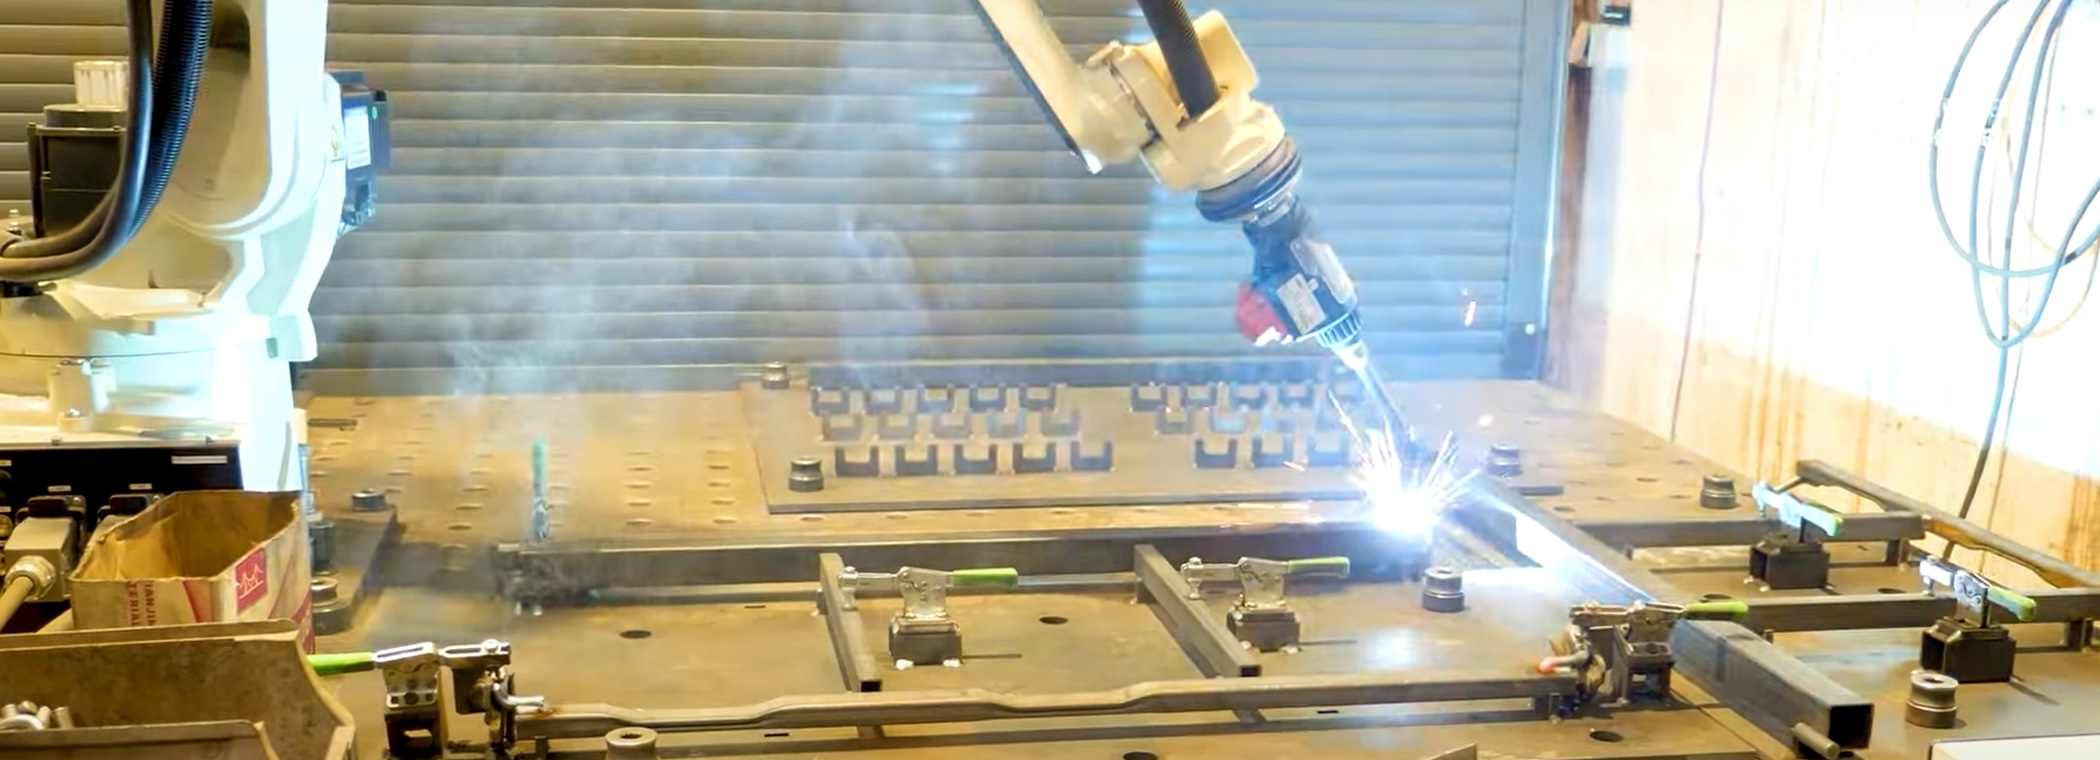 Sumara - CNC welding robots